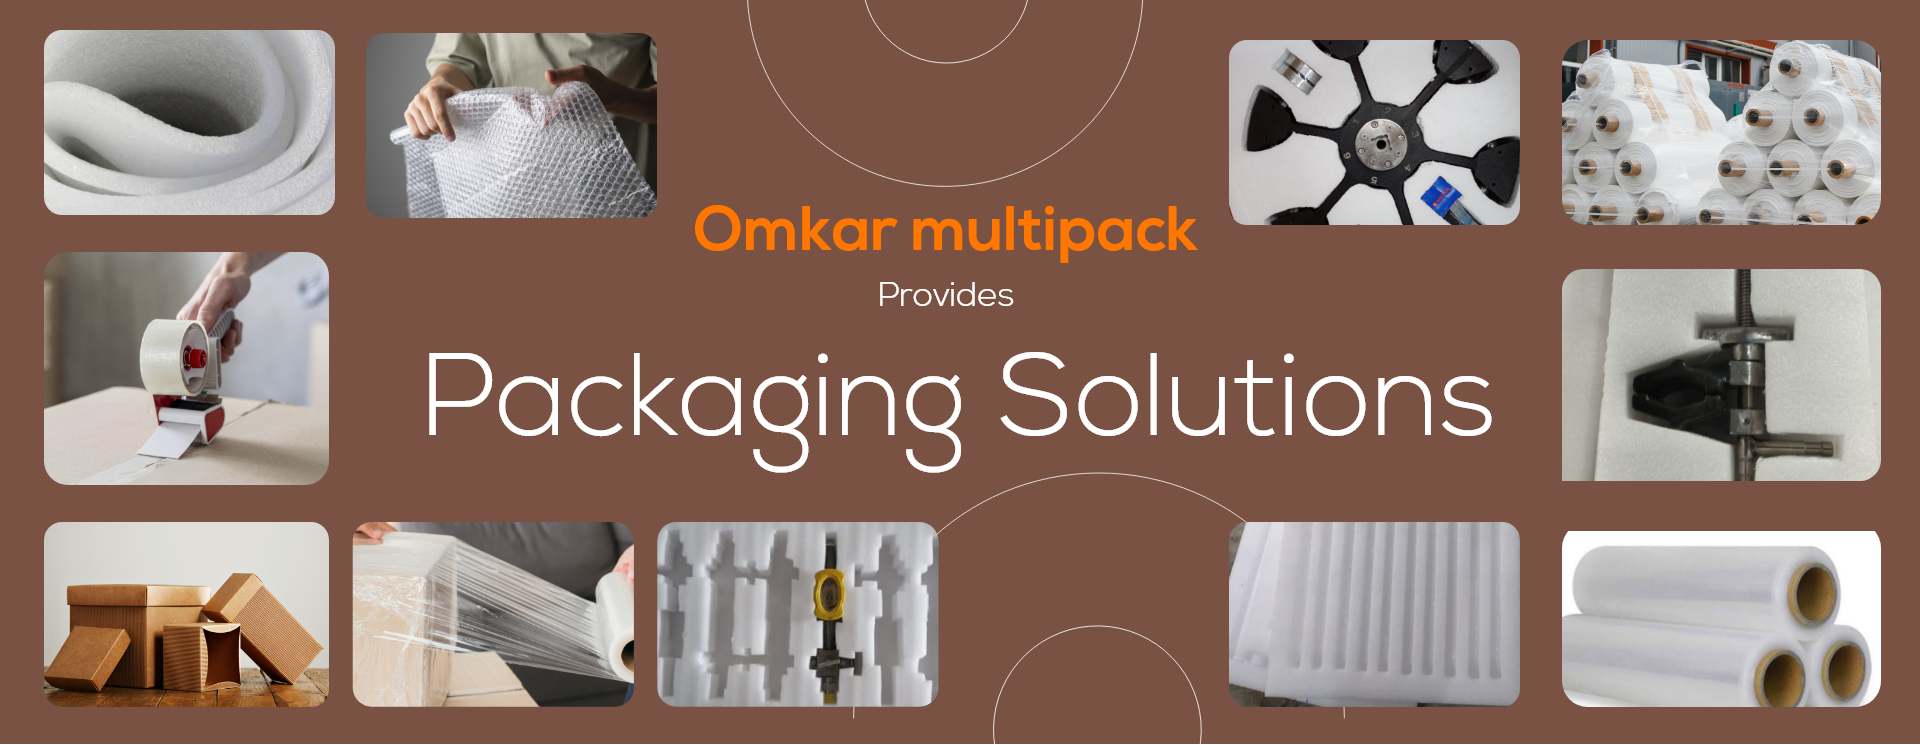 Omkar multipacks several provides products